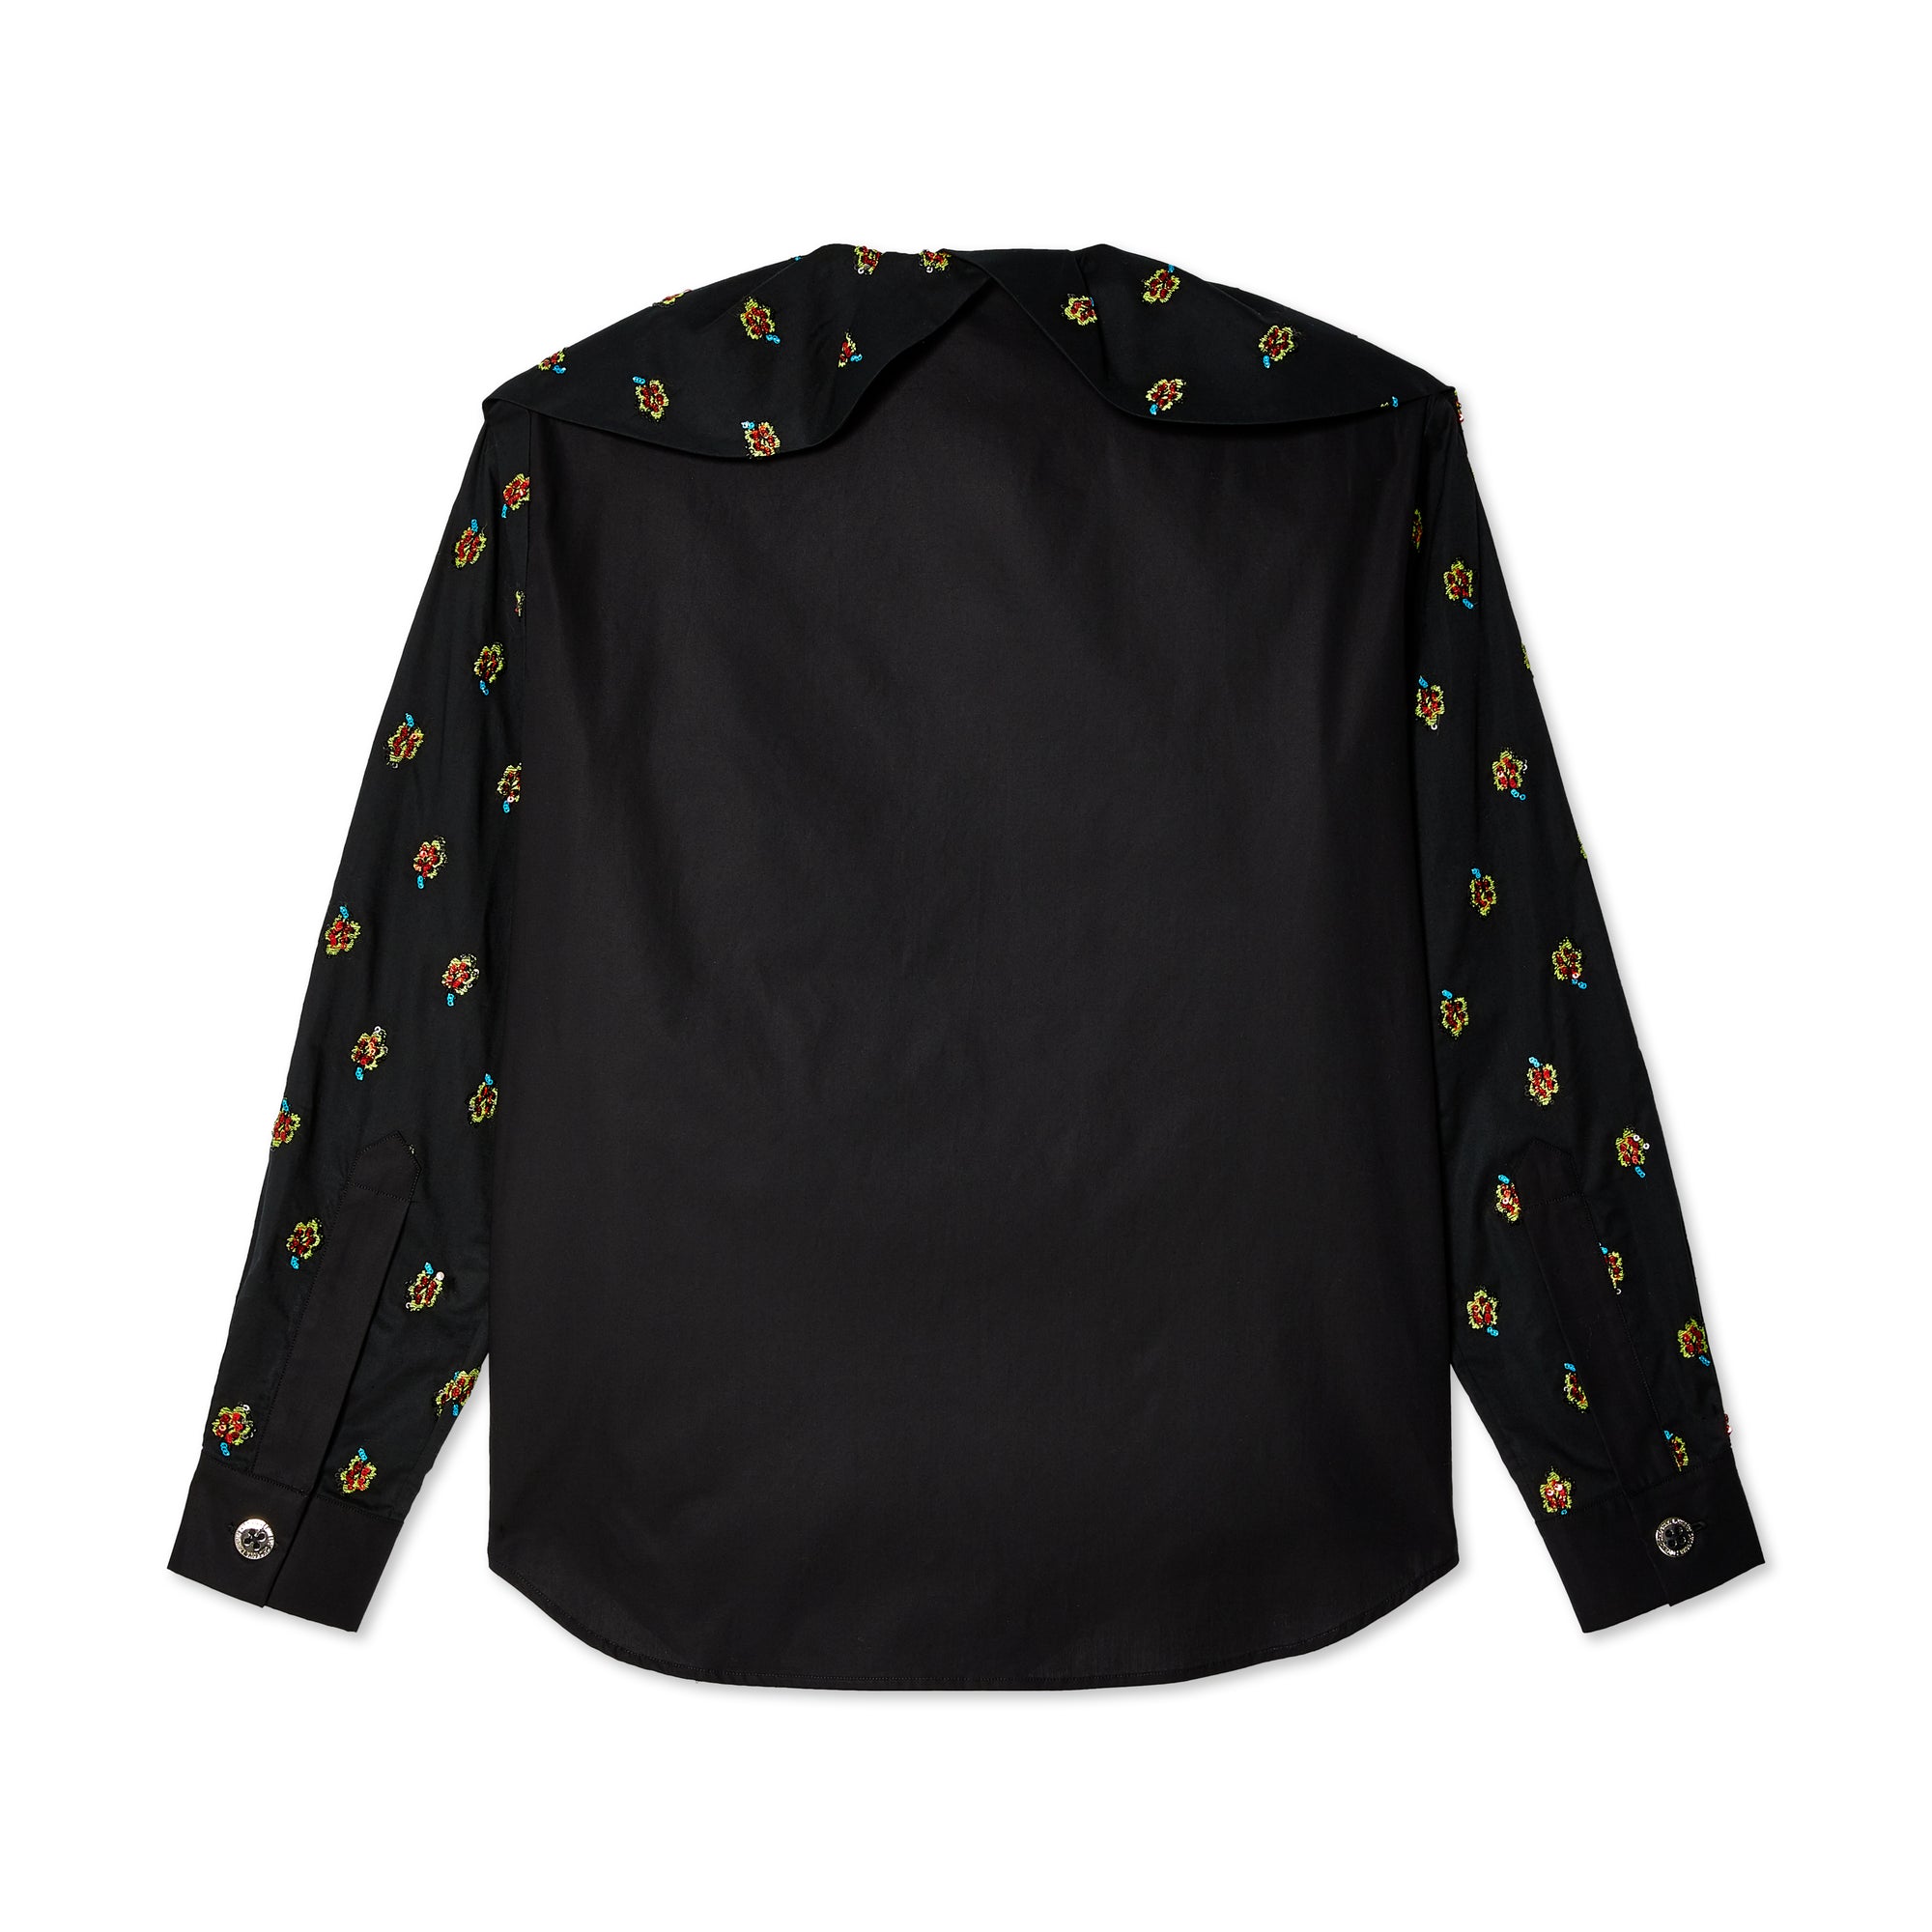 Chopova Lowena - Women's Corinthian Embroidered Shirt - (Black) view 2